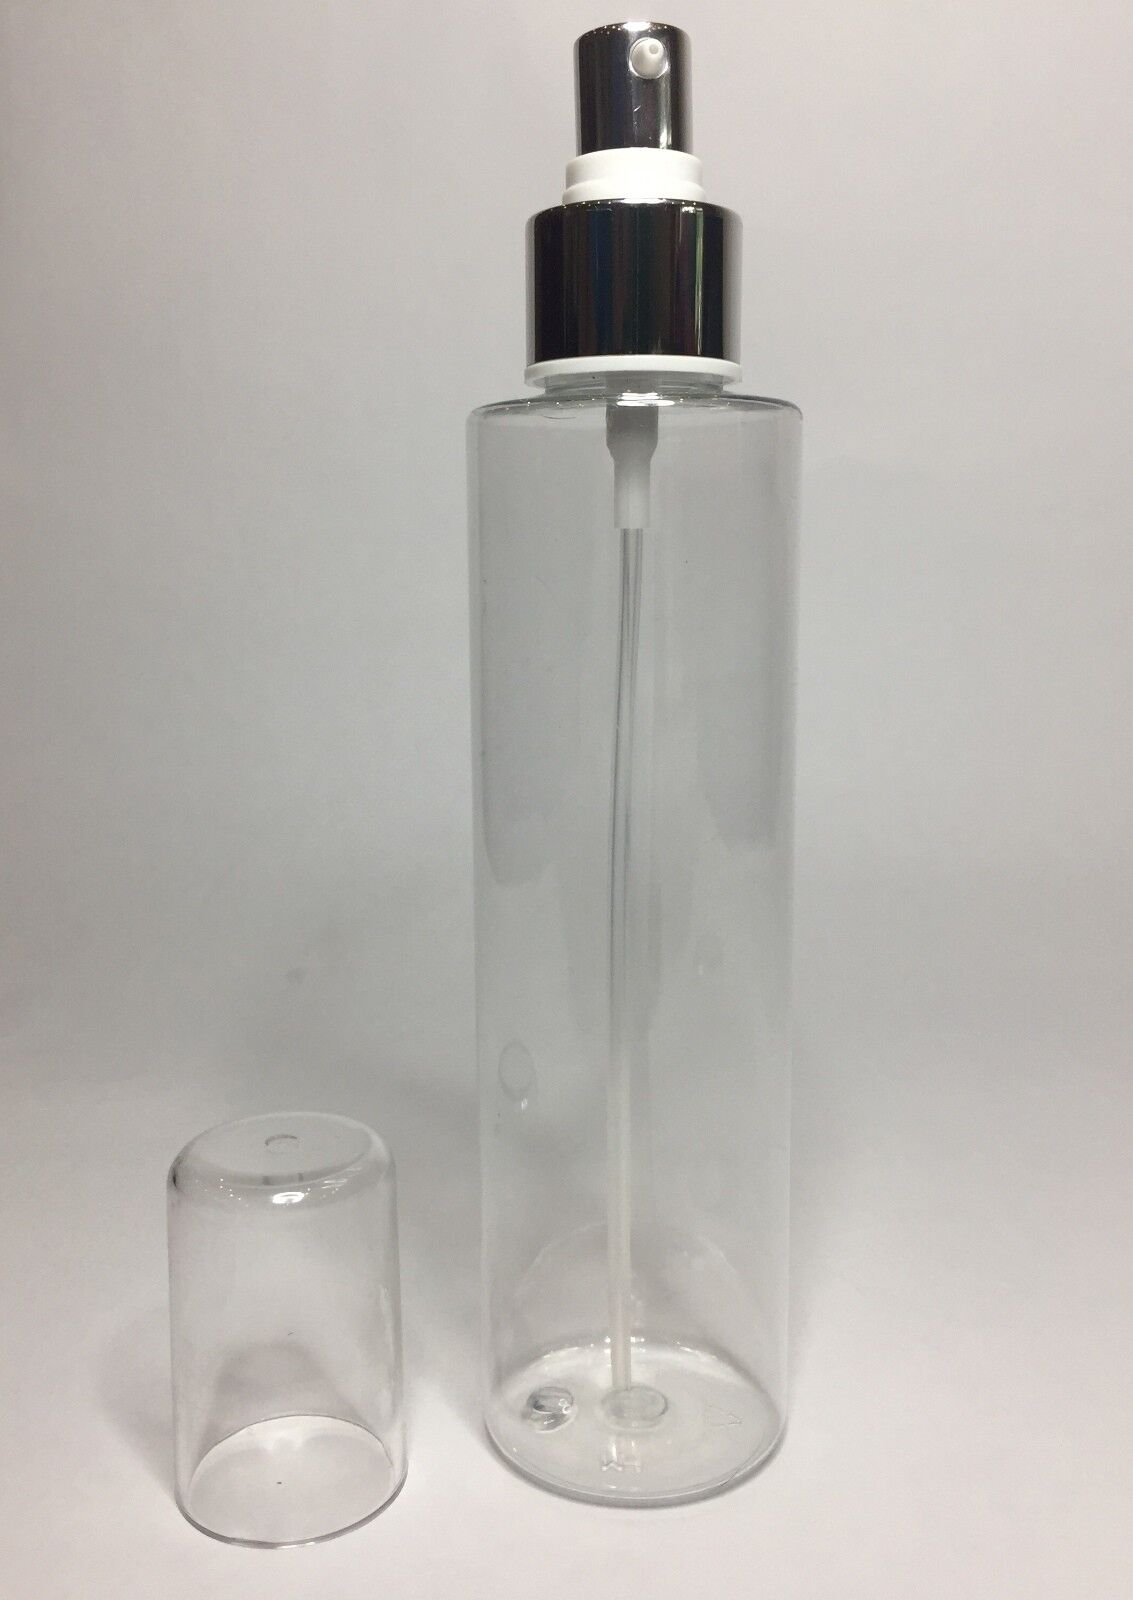 150ml Cylindrical PET Plastic Bottles And Shiny Silver Serum Pump *ANY AMOUNT* Gratis landelijk, standaard